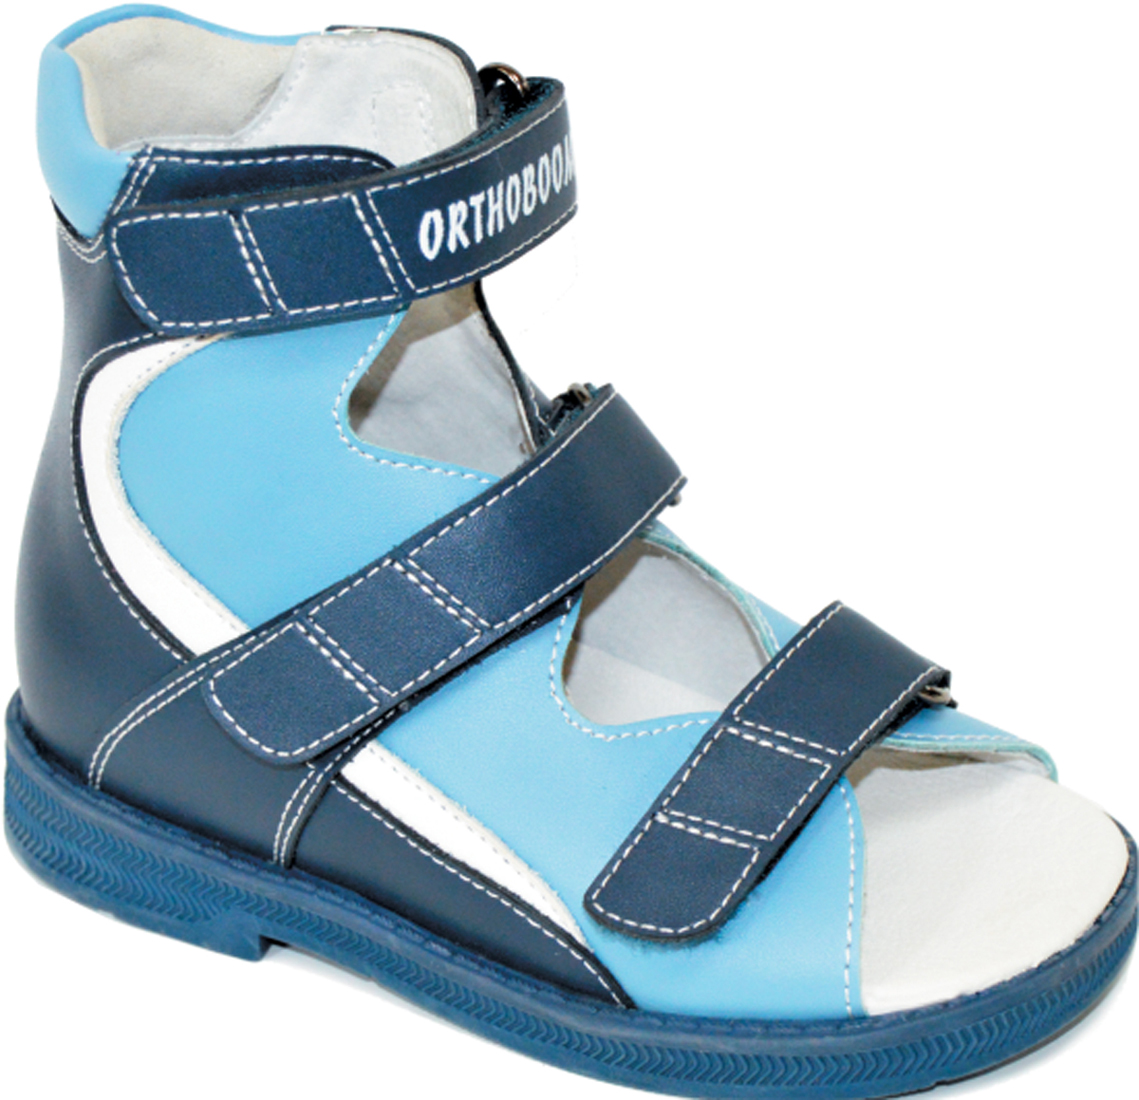 Сандалии для мальчика Orthoboom, цвет: темно-синий-голубой-белый. 71597-33. Размер 25